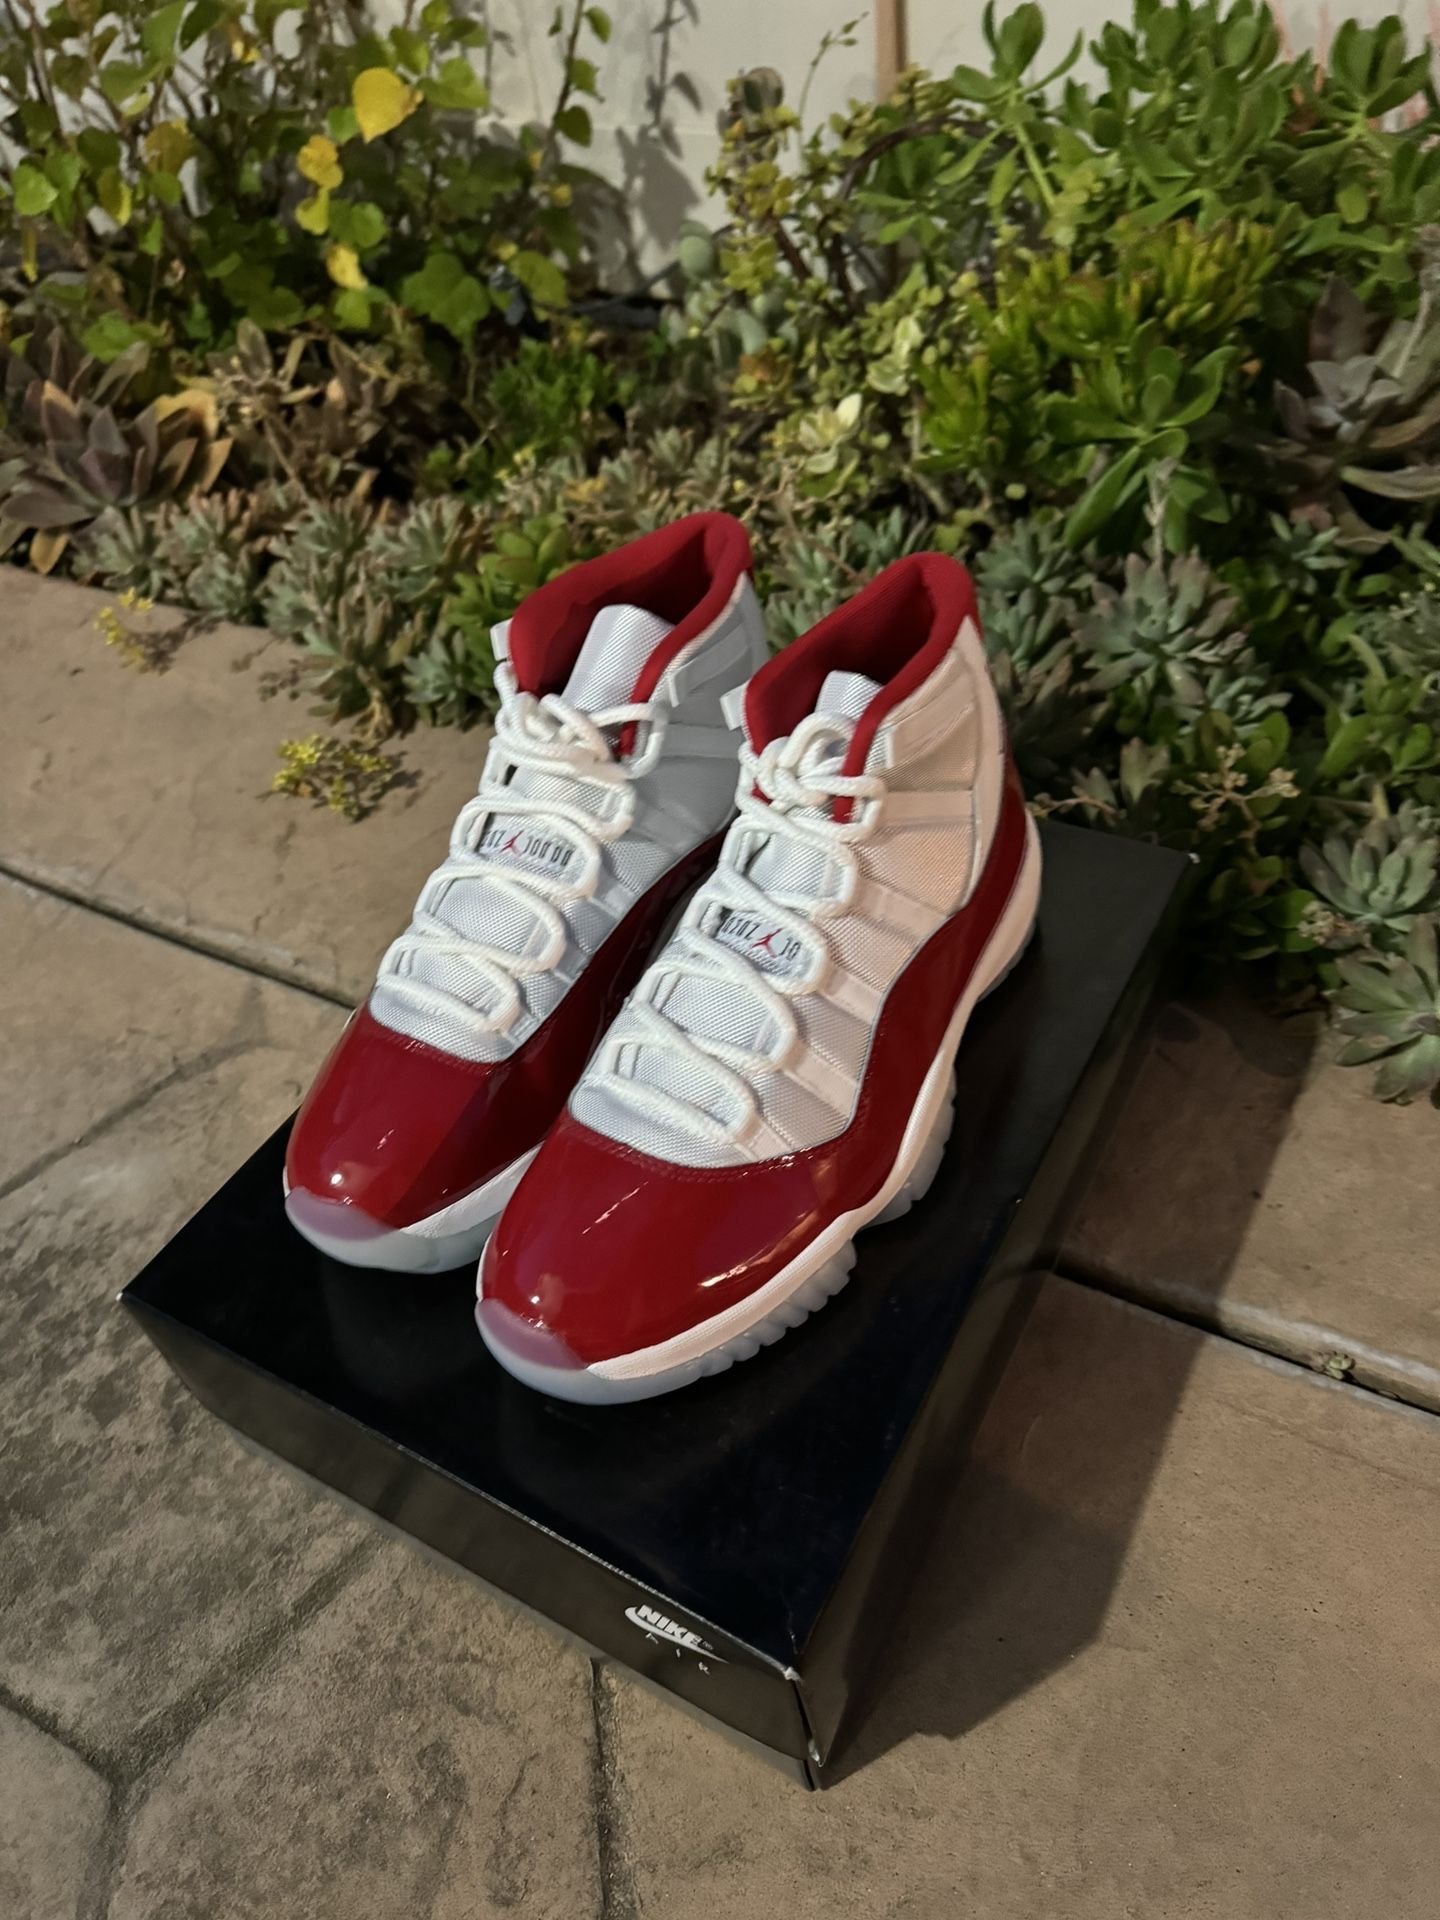 Jordan 11 Cherry Size 11.5 Brand New With Box